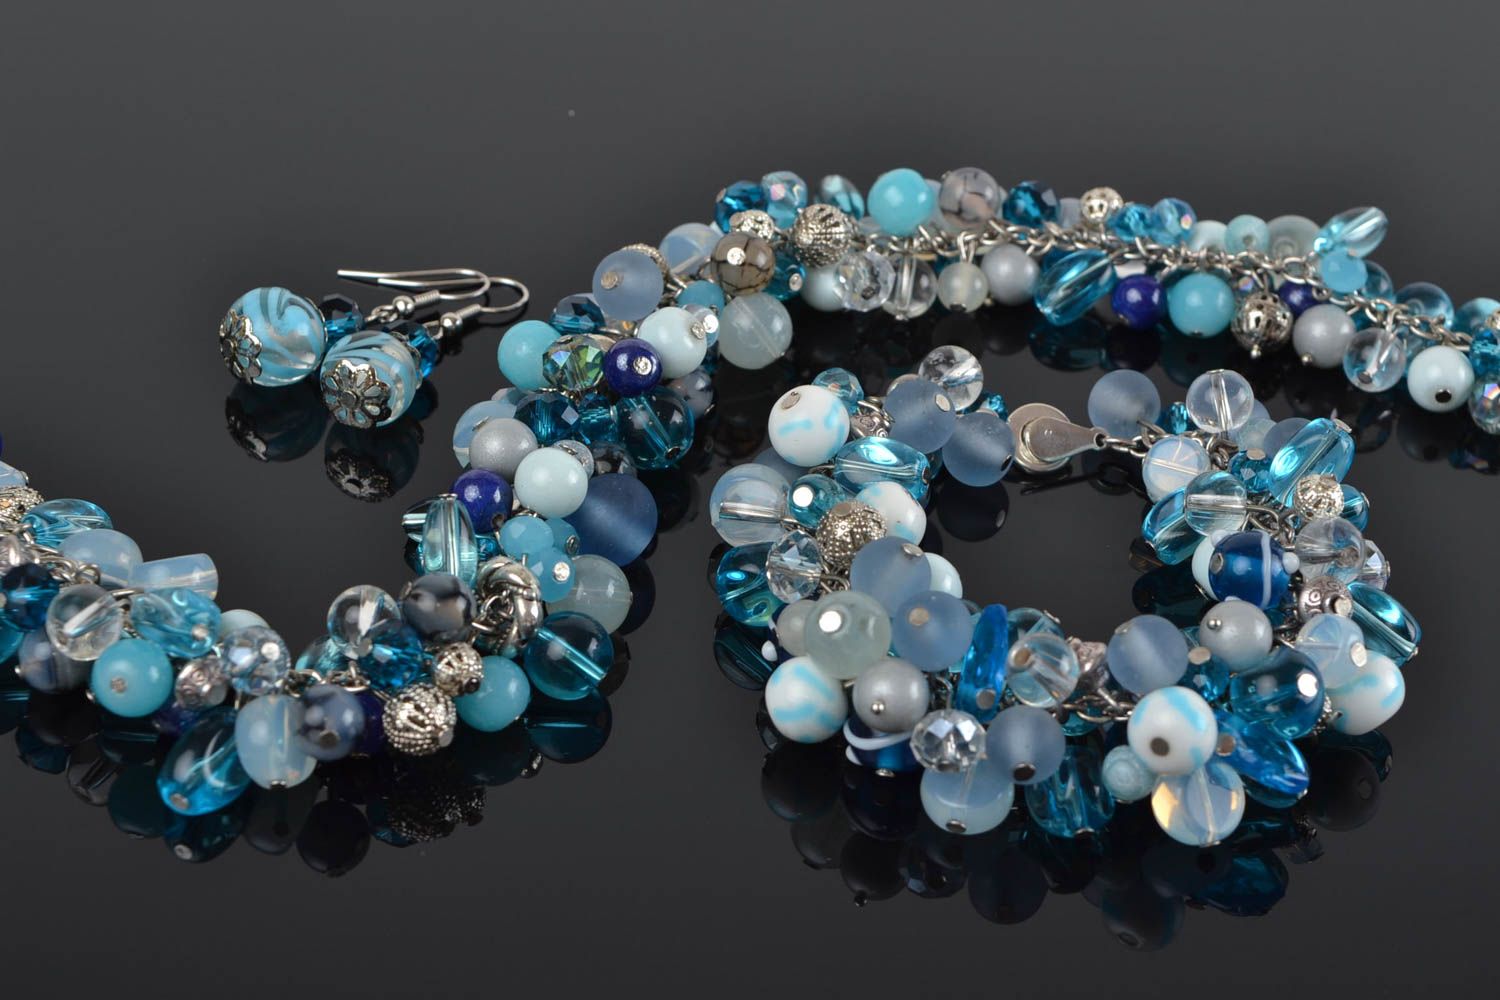 Handmade blue stone and glass bead jewelry set necklace earrings bracelet photo 1